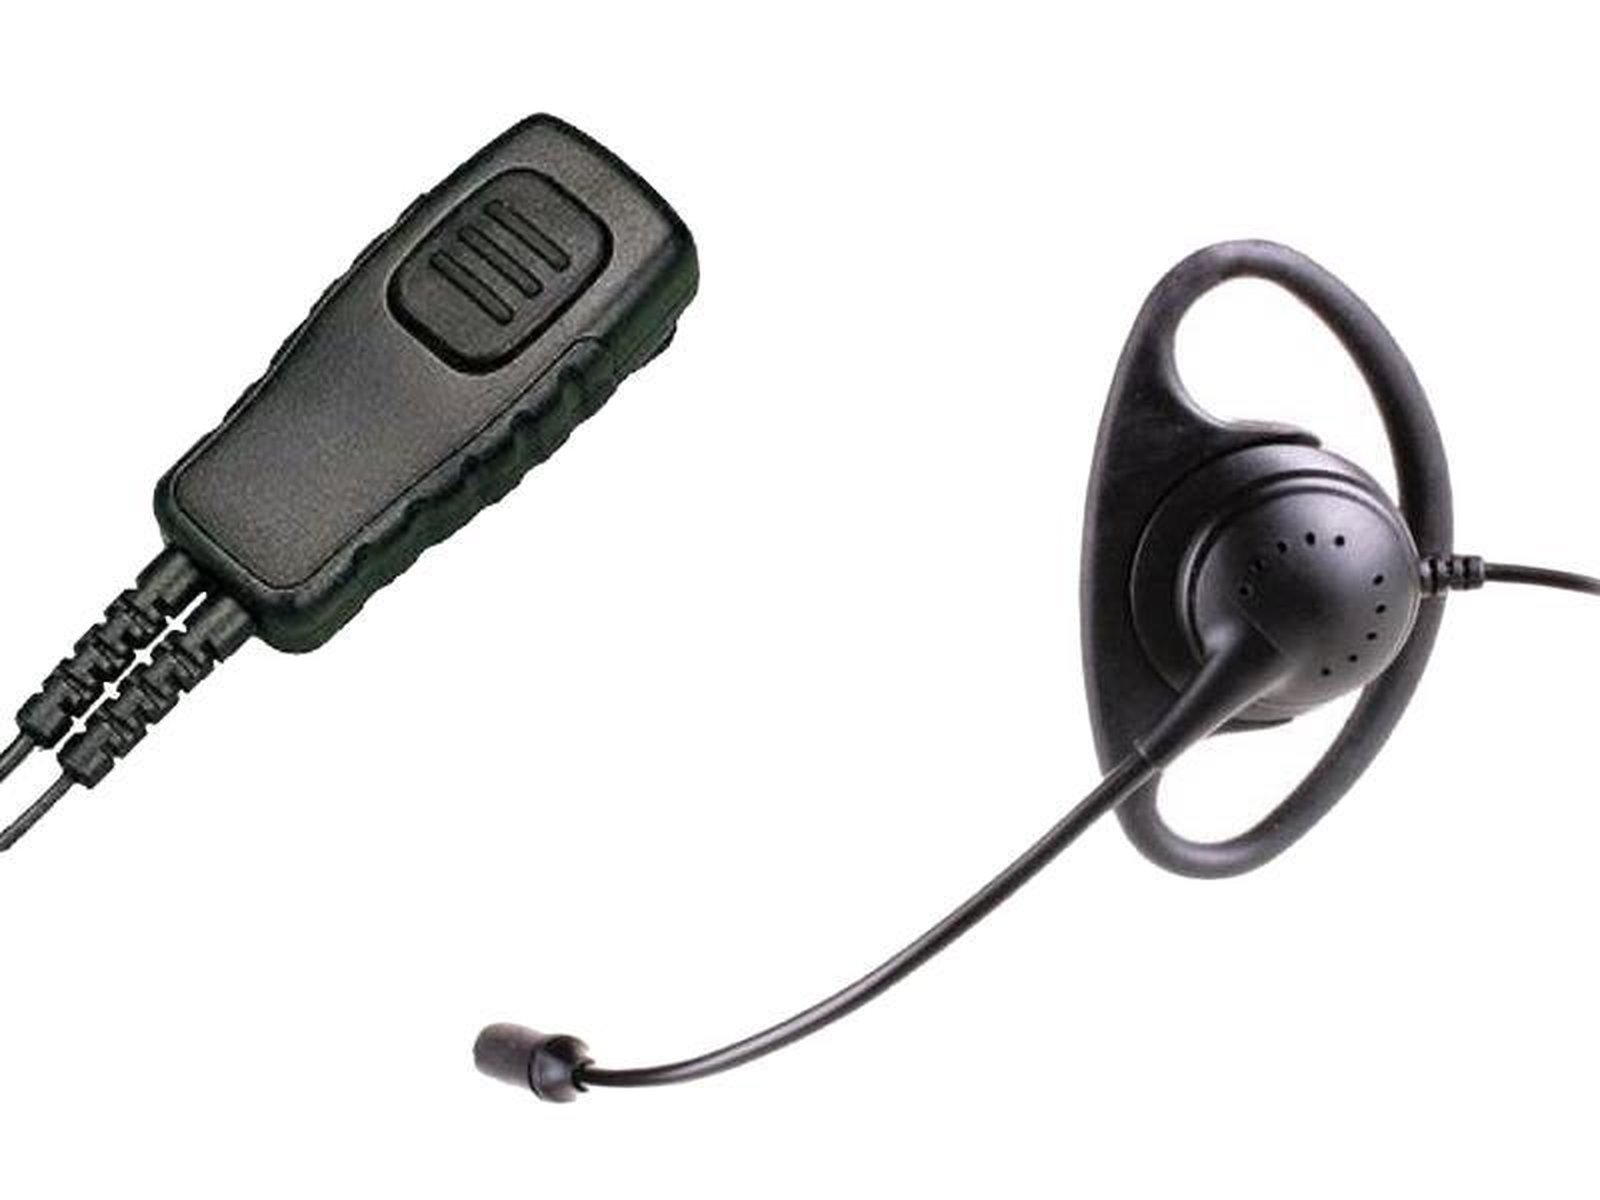 Headset mit Lippenmikrofon HS20-K